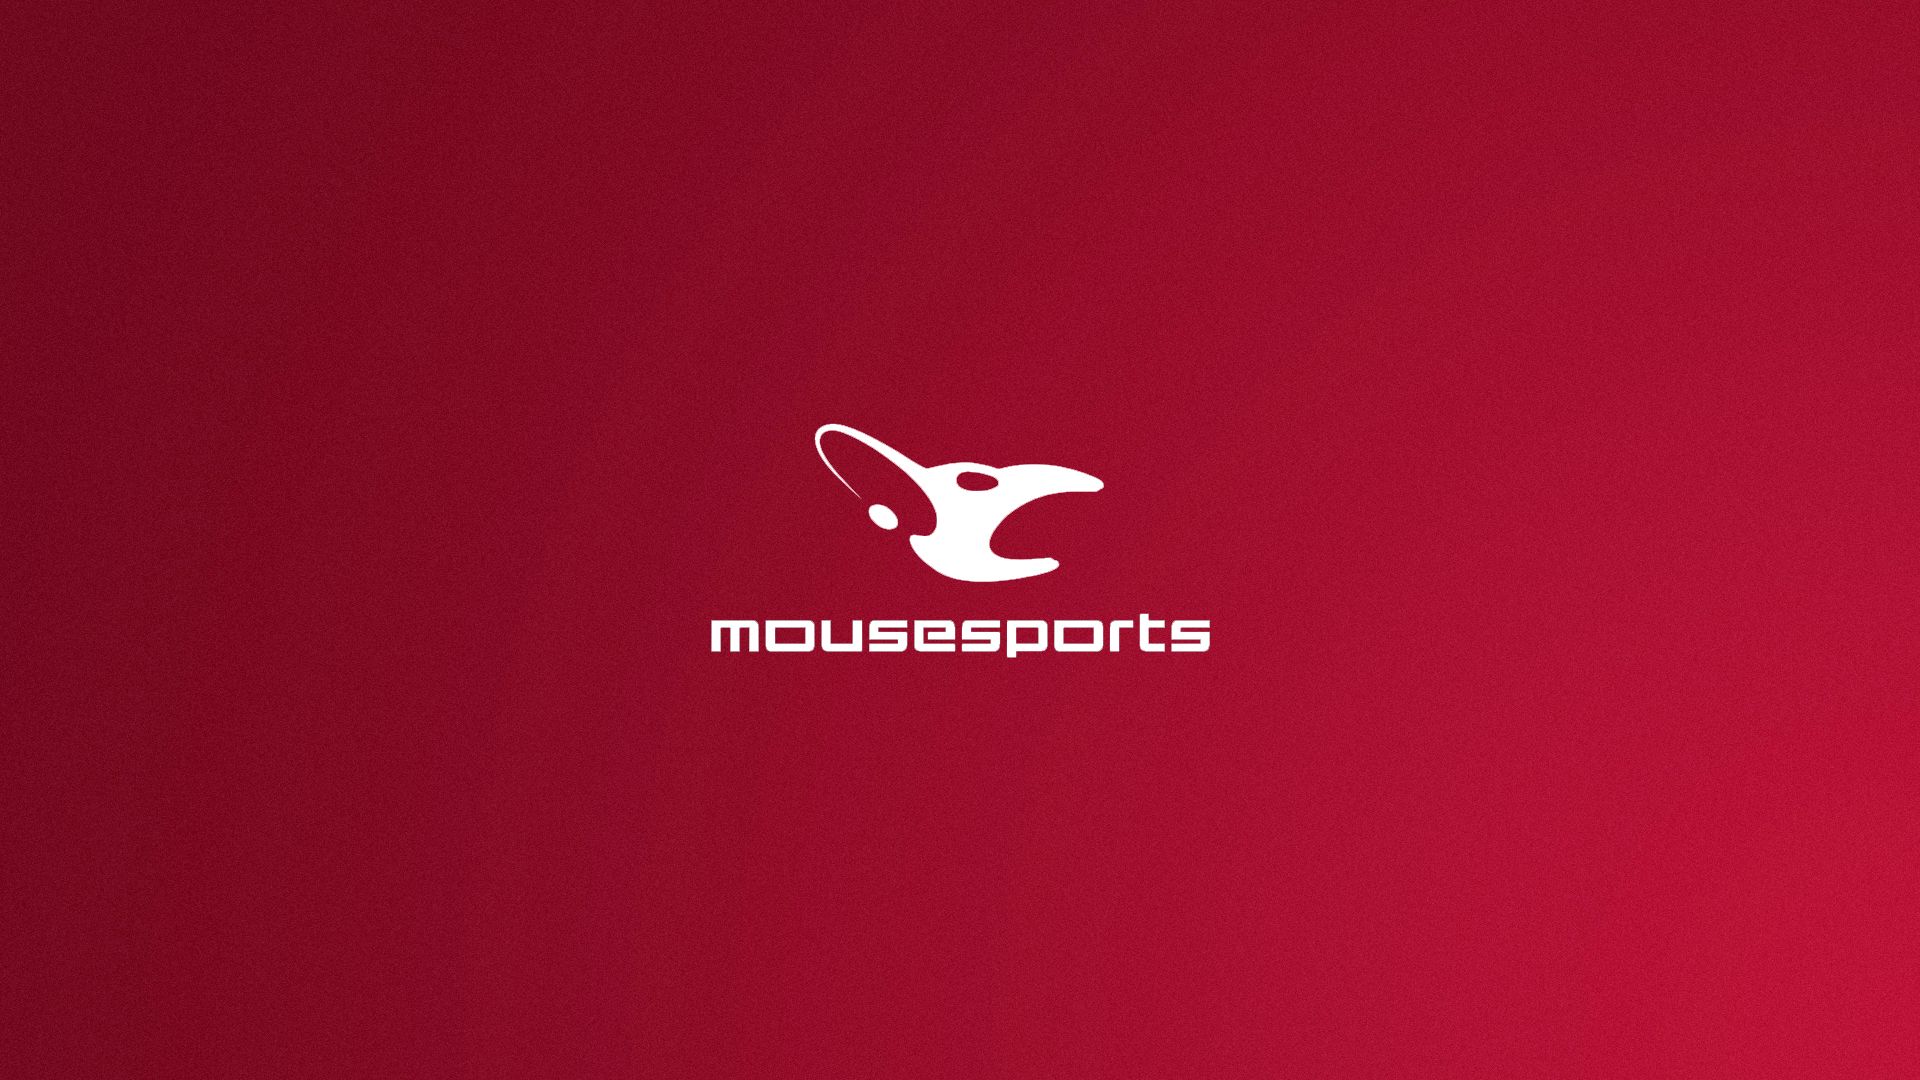 mousesports Wallpaper